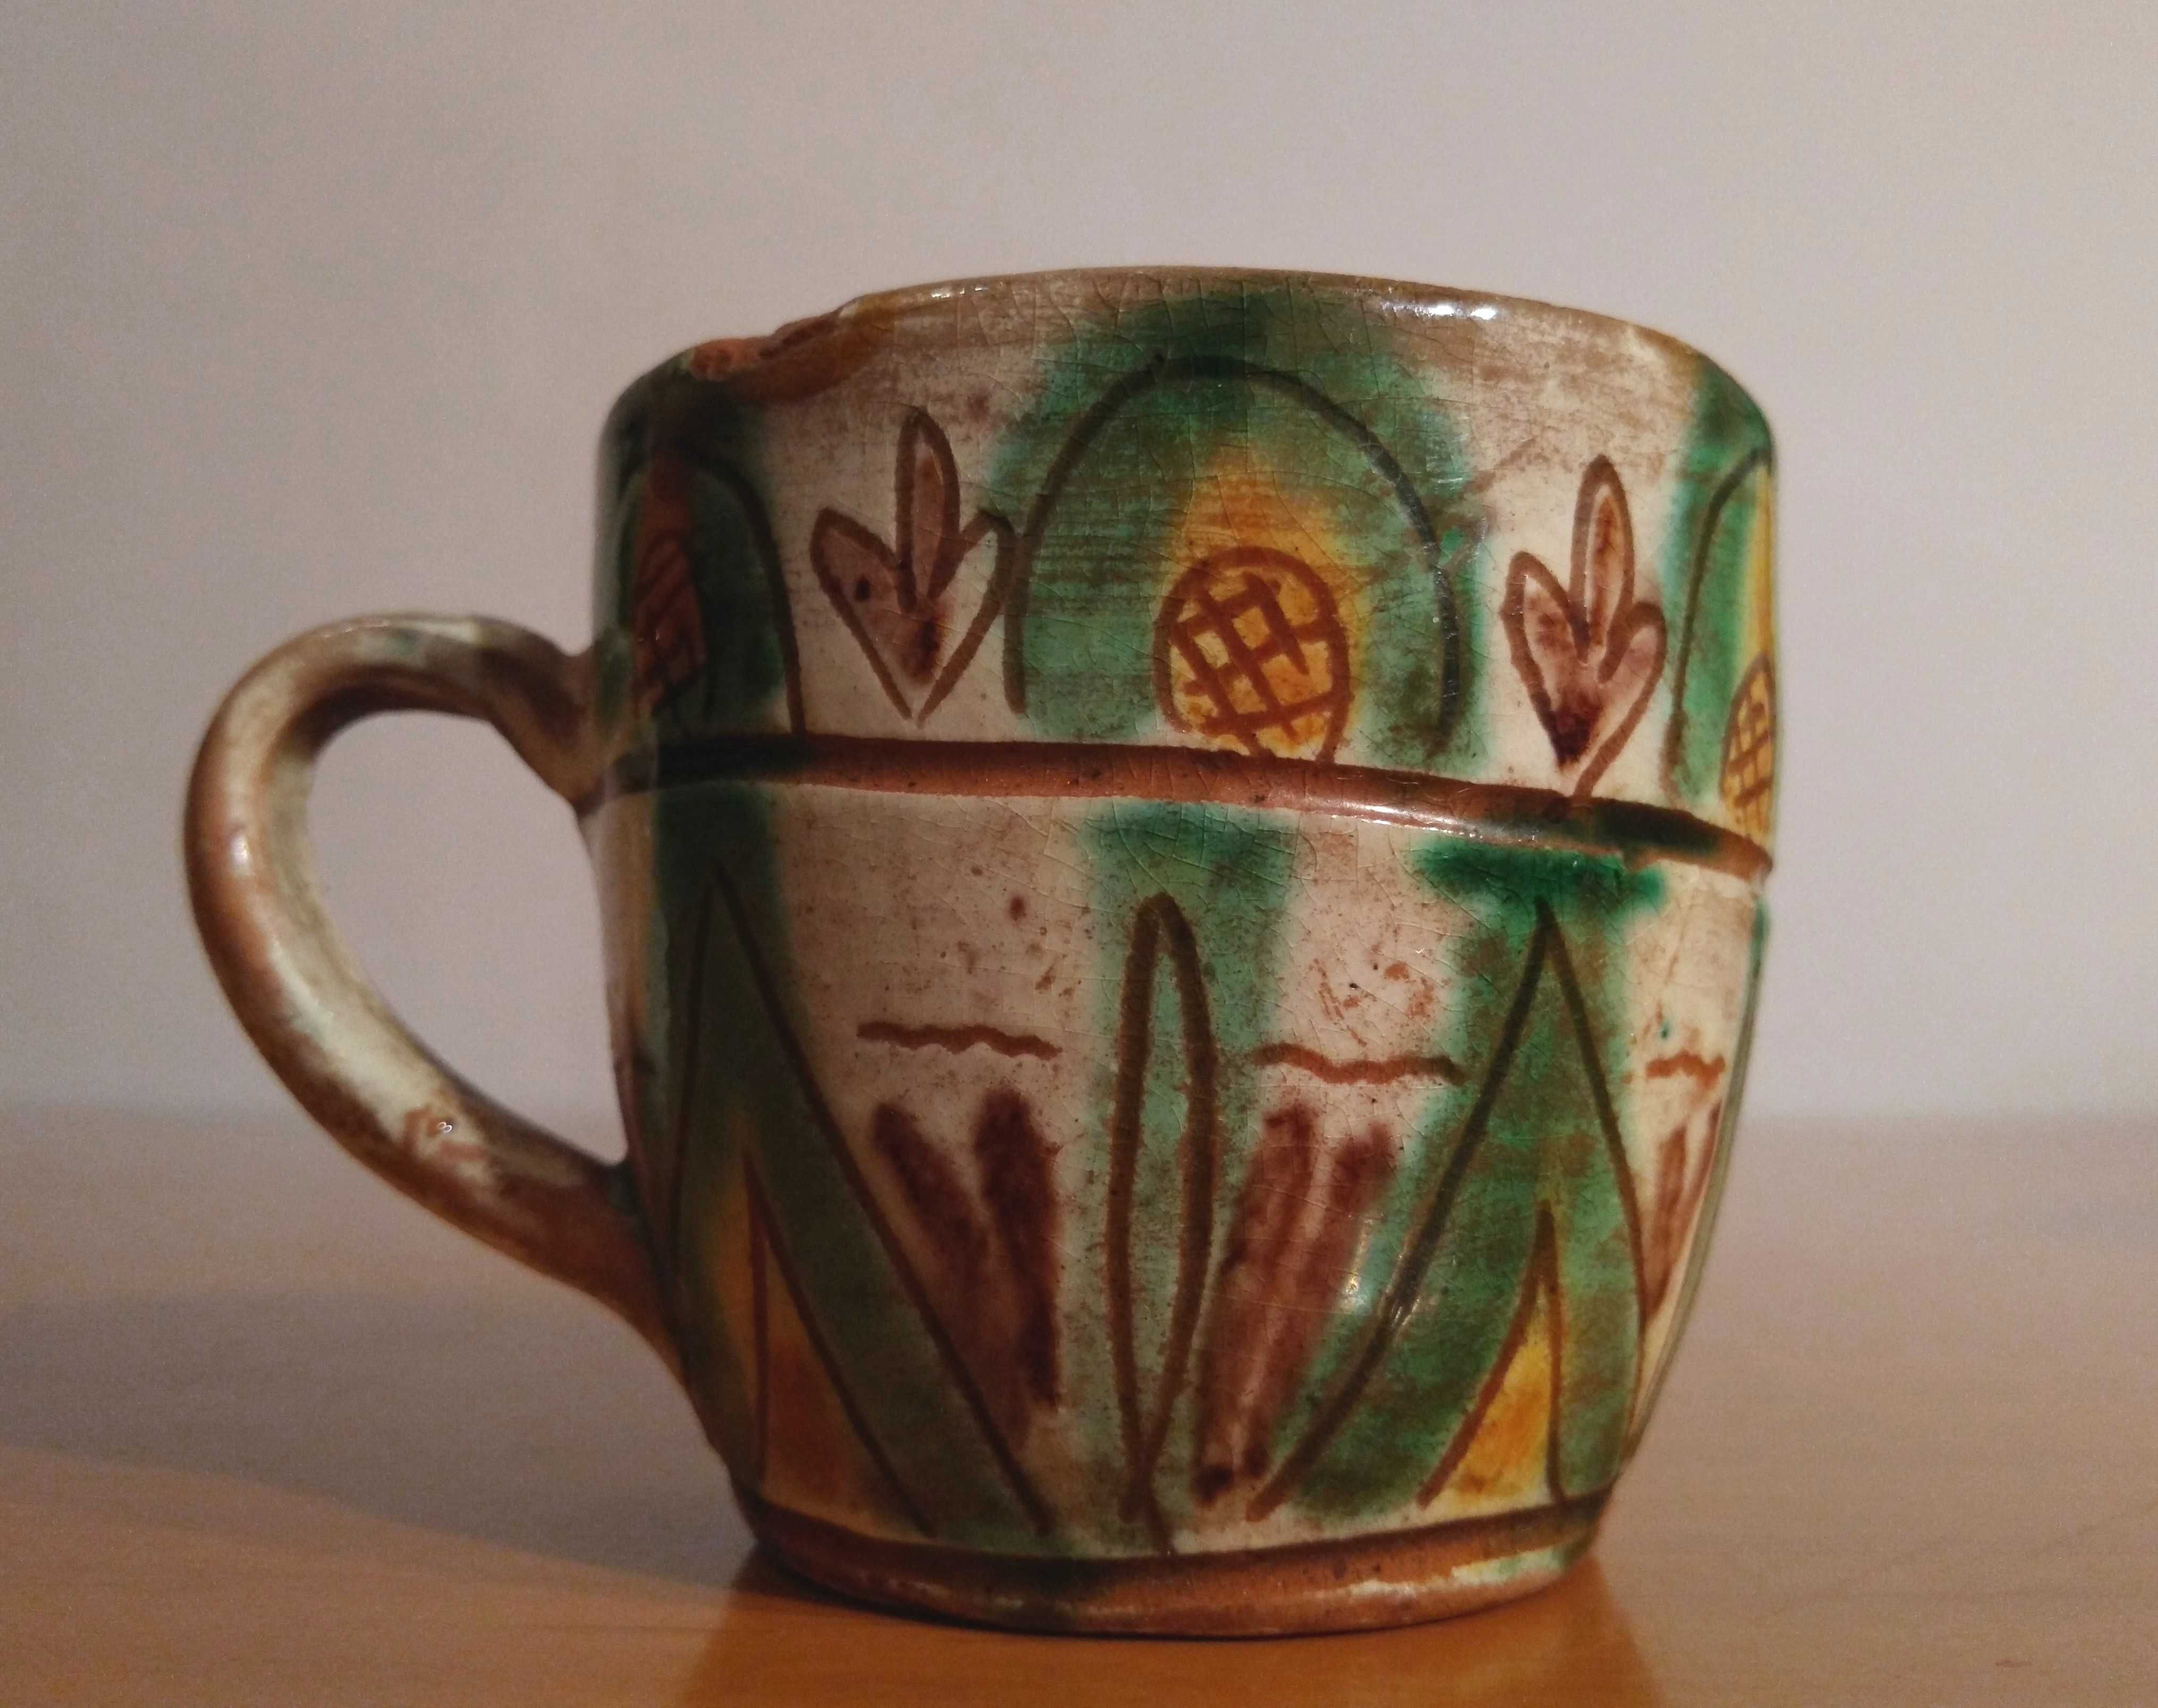 Cesti tip Kuty semnate Colibaba | Ceramica traditionala veche